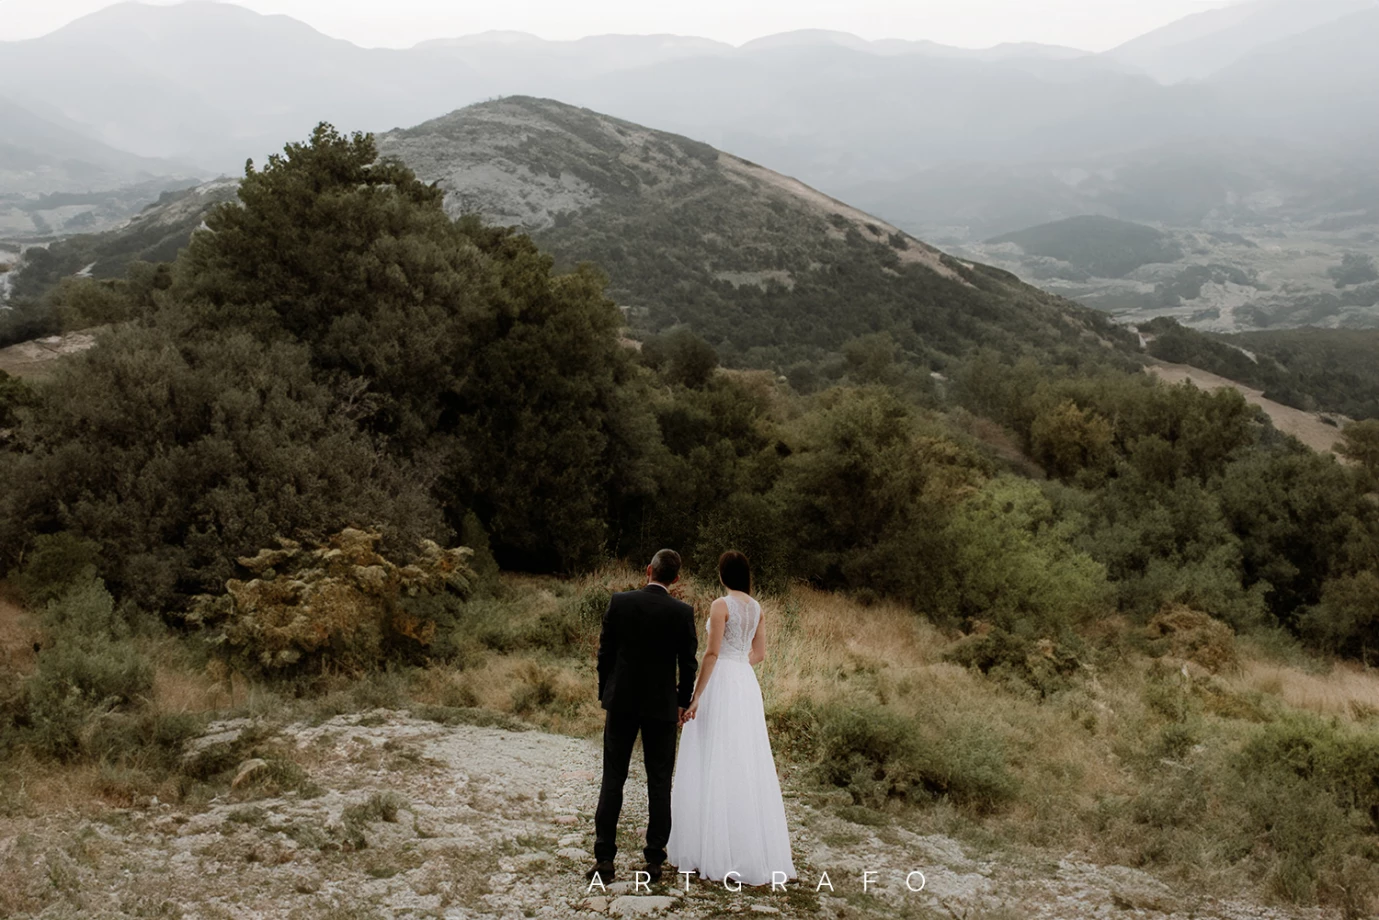 fotograf nowy-targ artgrafo-wedding portfolio zdjecia slubne inspiracje wesele plener slubny sesja slubna